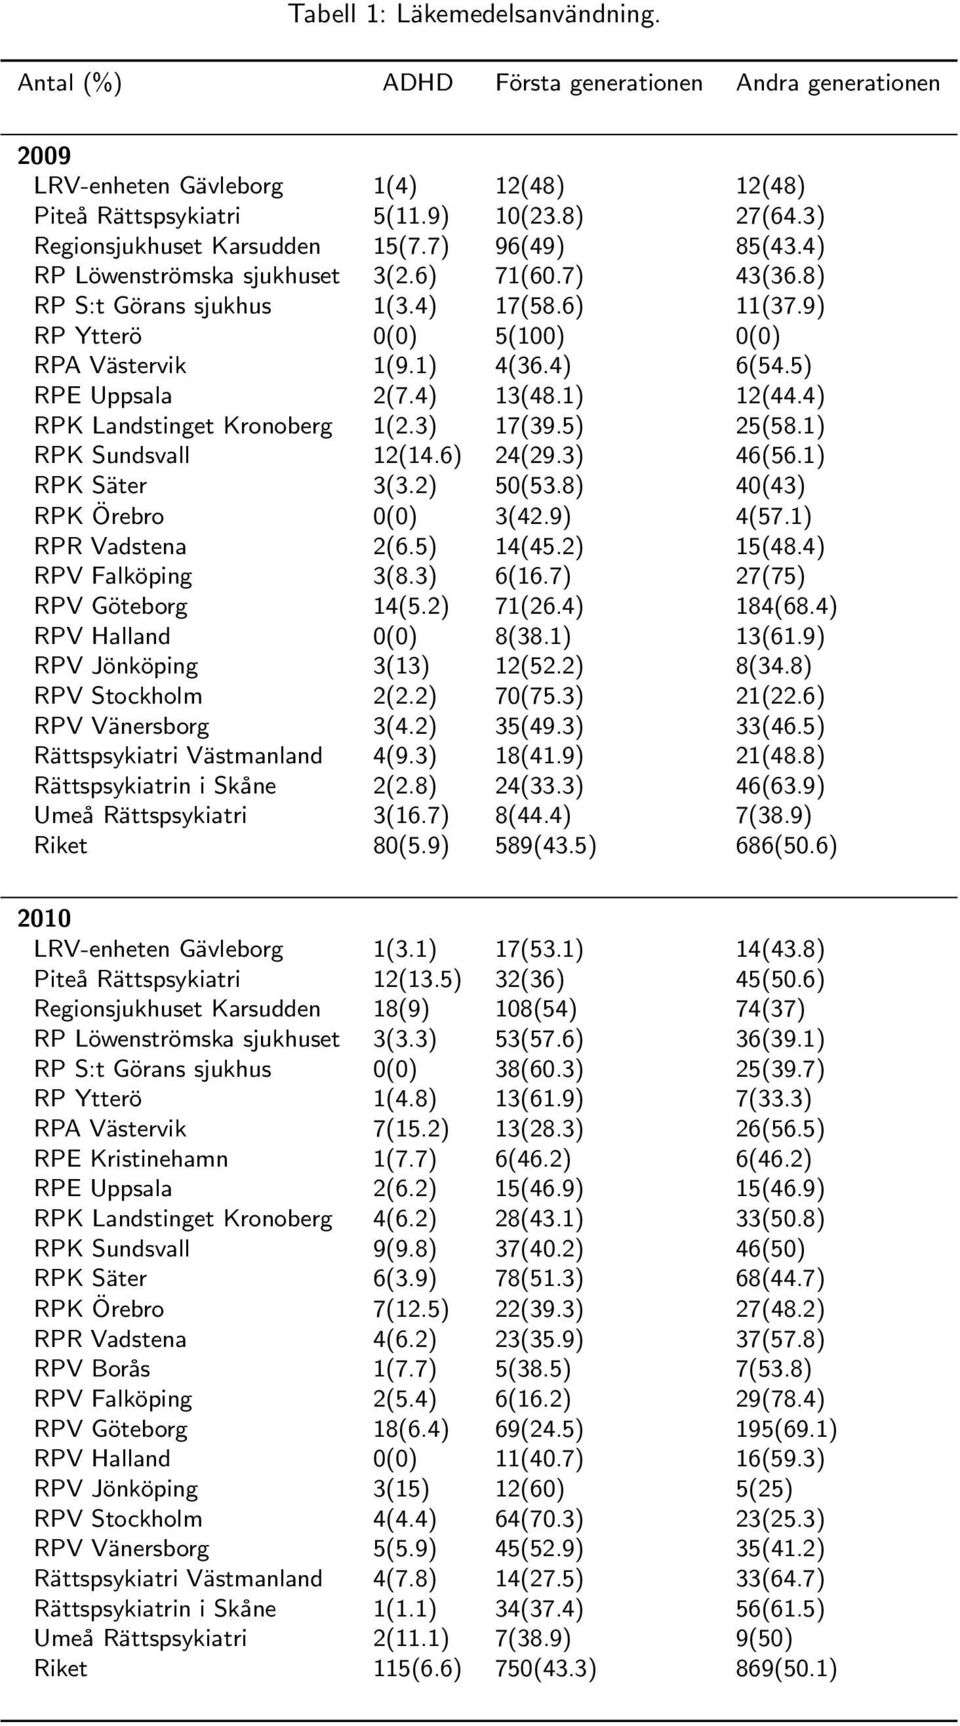 1) 4(36.4) 6(54.5) RPE Uppsala 2(7.4) 13(48.1) 12(44.4) RPK Landstinget Kronoberg 1(2.3) 17(39.5) 25(58.1) RPK Sundsvall 12(14.6) 24(29.3) 46(56.1) RPK Säter 3(3.2) 50(53.